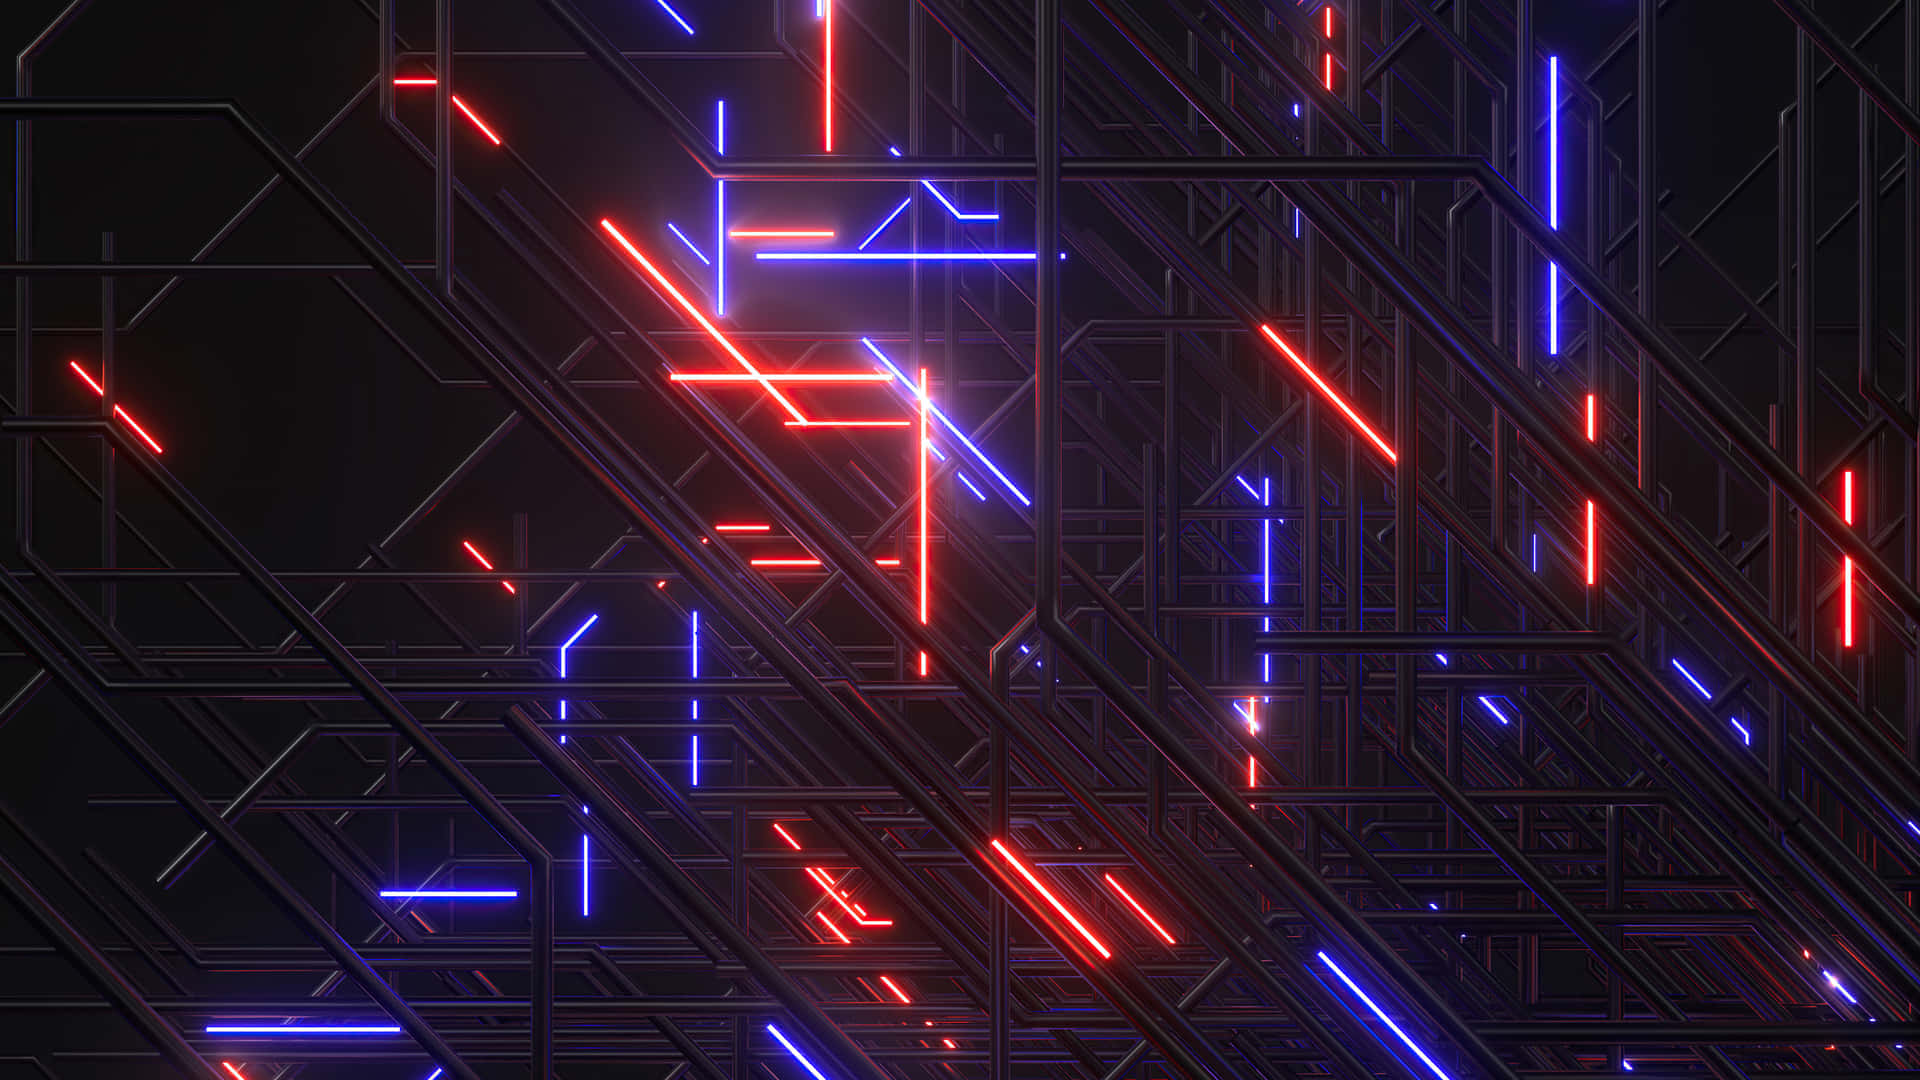 Abstract Neon Labyrinth.jpg Wallpaper